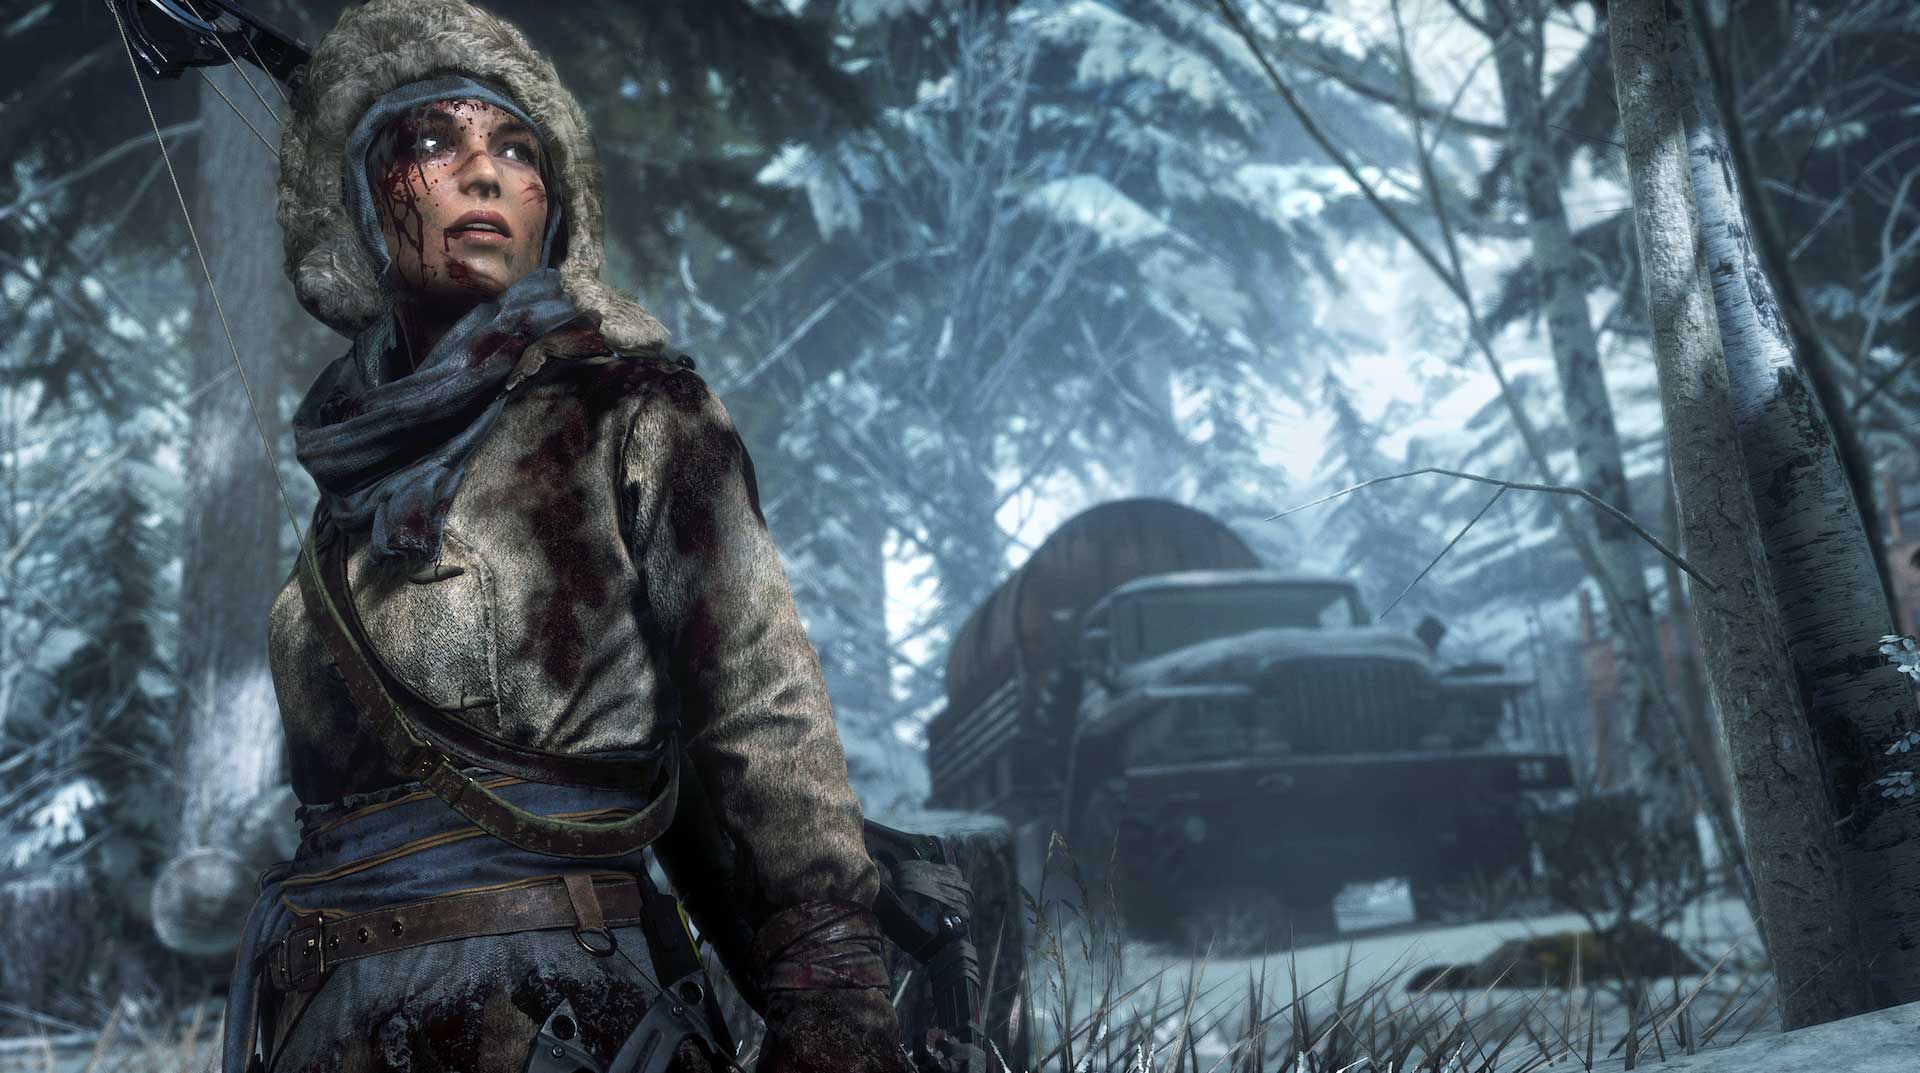 Tomb Raider Reboot Trilogy Free on Epic Games Store - Gameranx